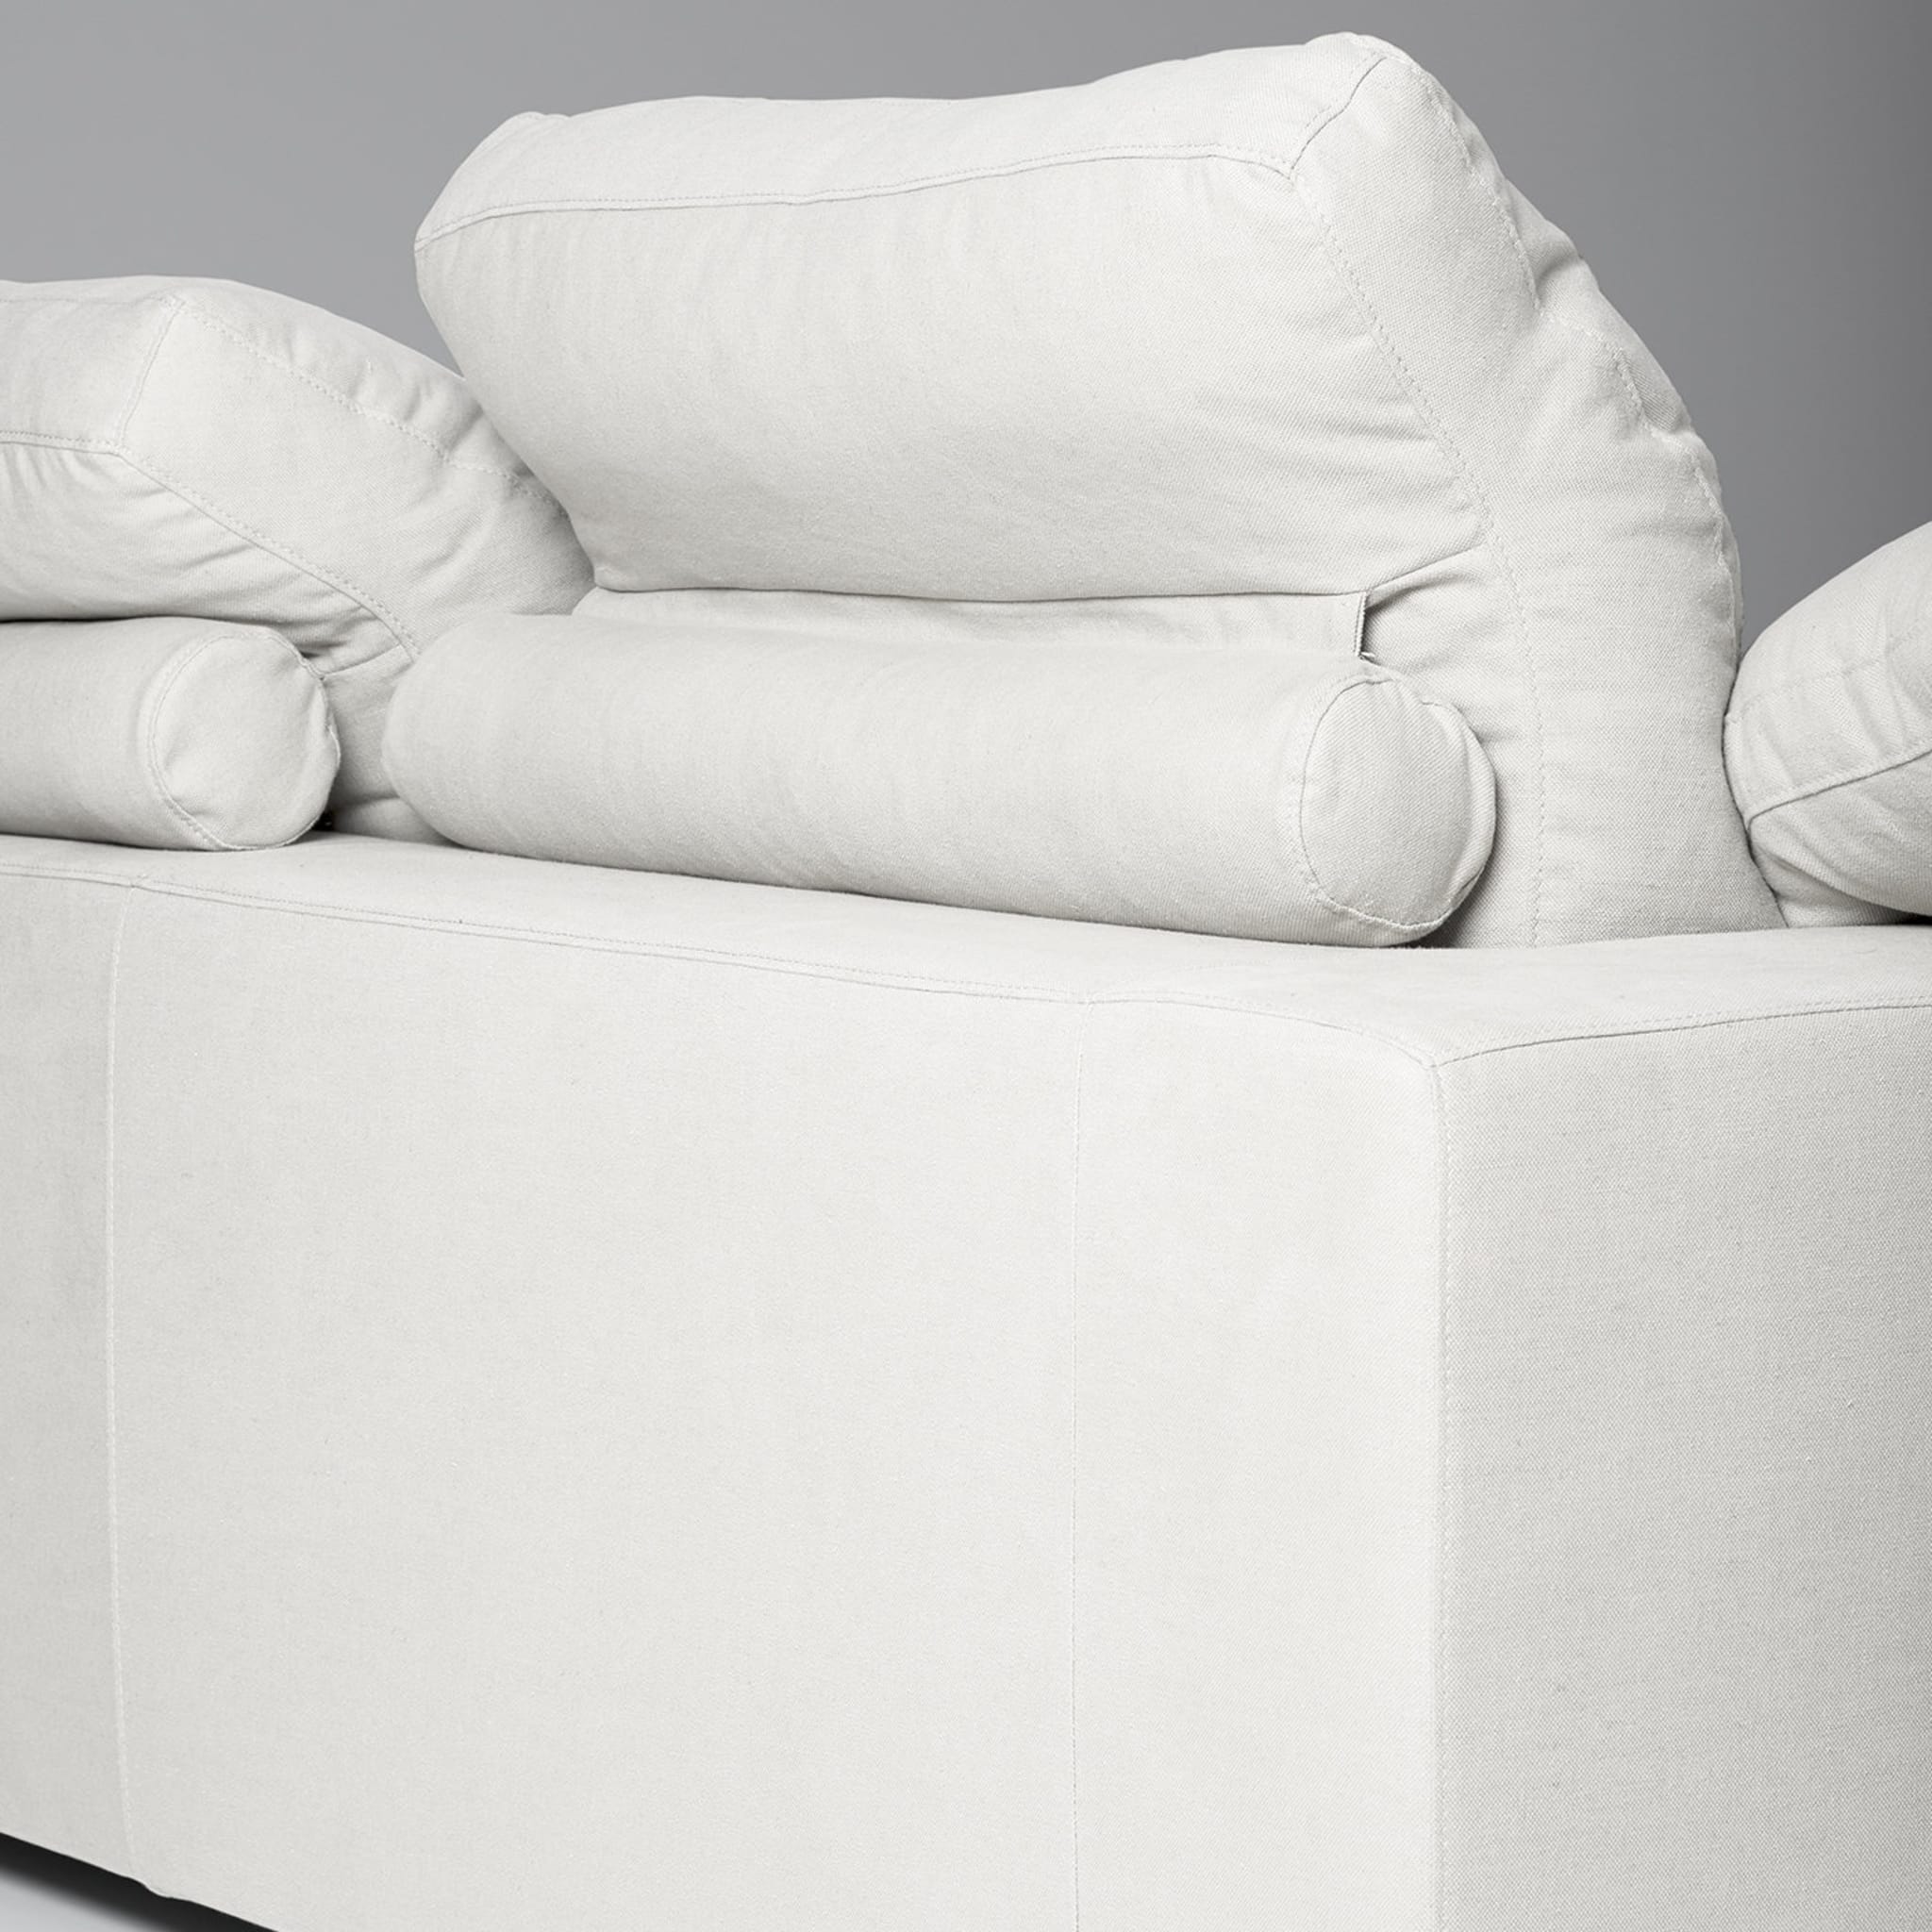 Italo 3-Seater Sofa Tribeca Collection by Marco and Giulio Mantellassi - Alternative view 1